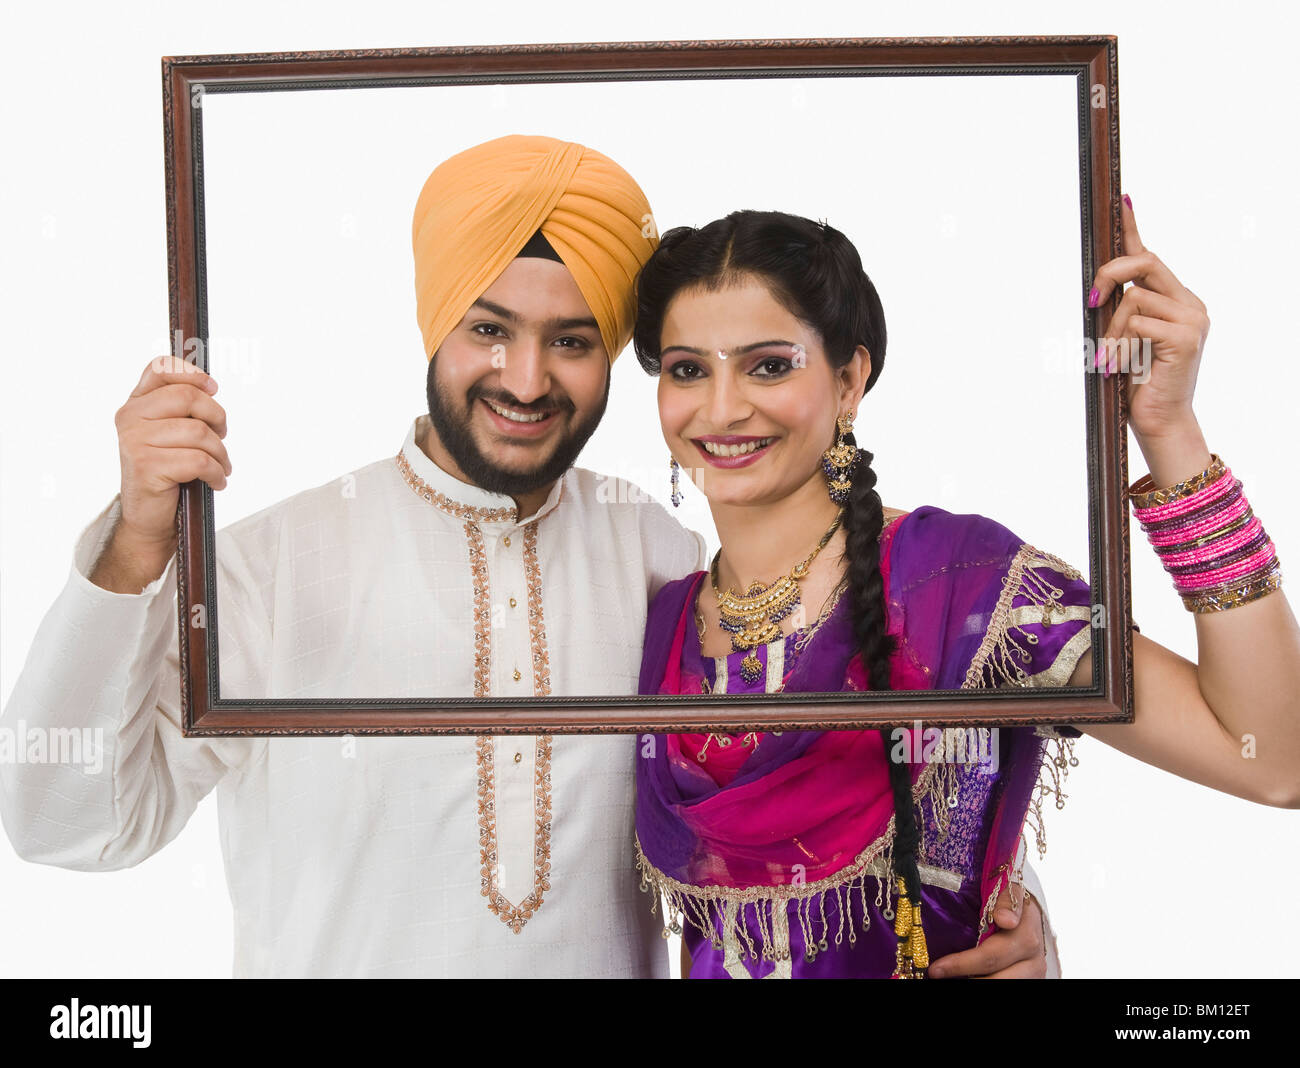 Nav jivan | Indian wedding couple, Wedding couple poses photography, Indian  designer outfits